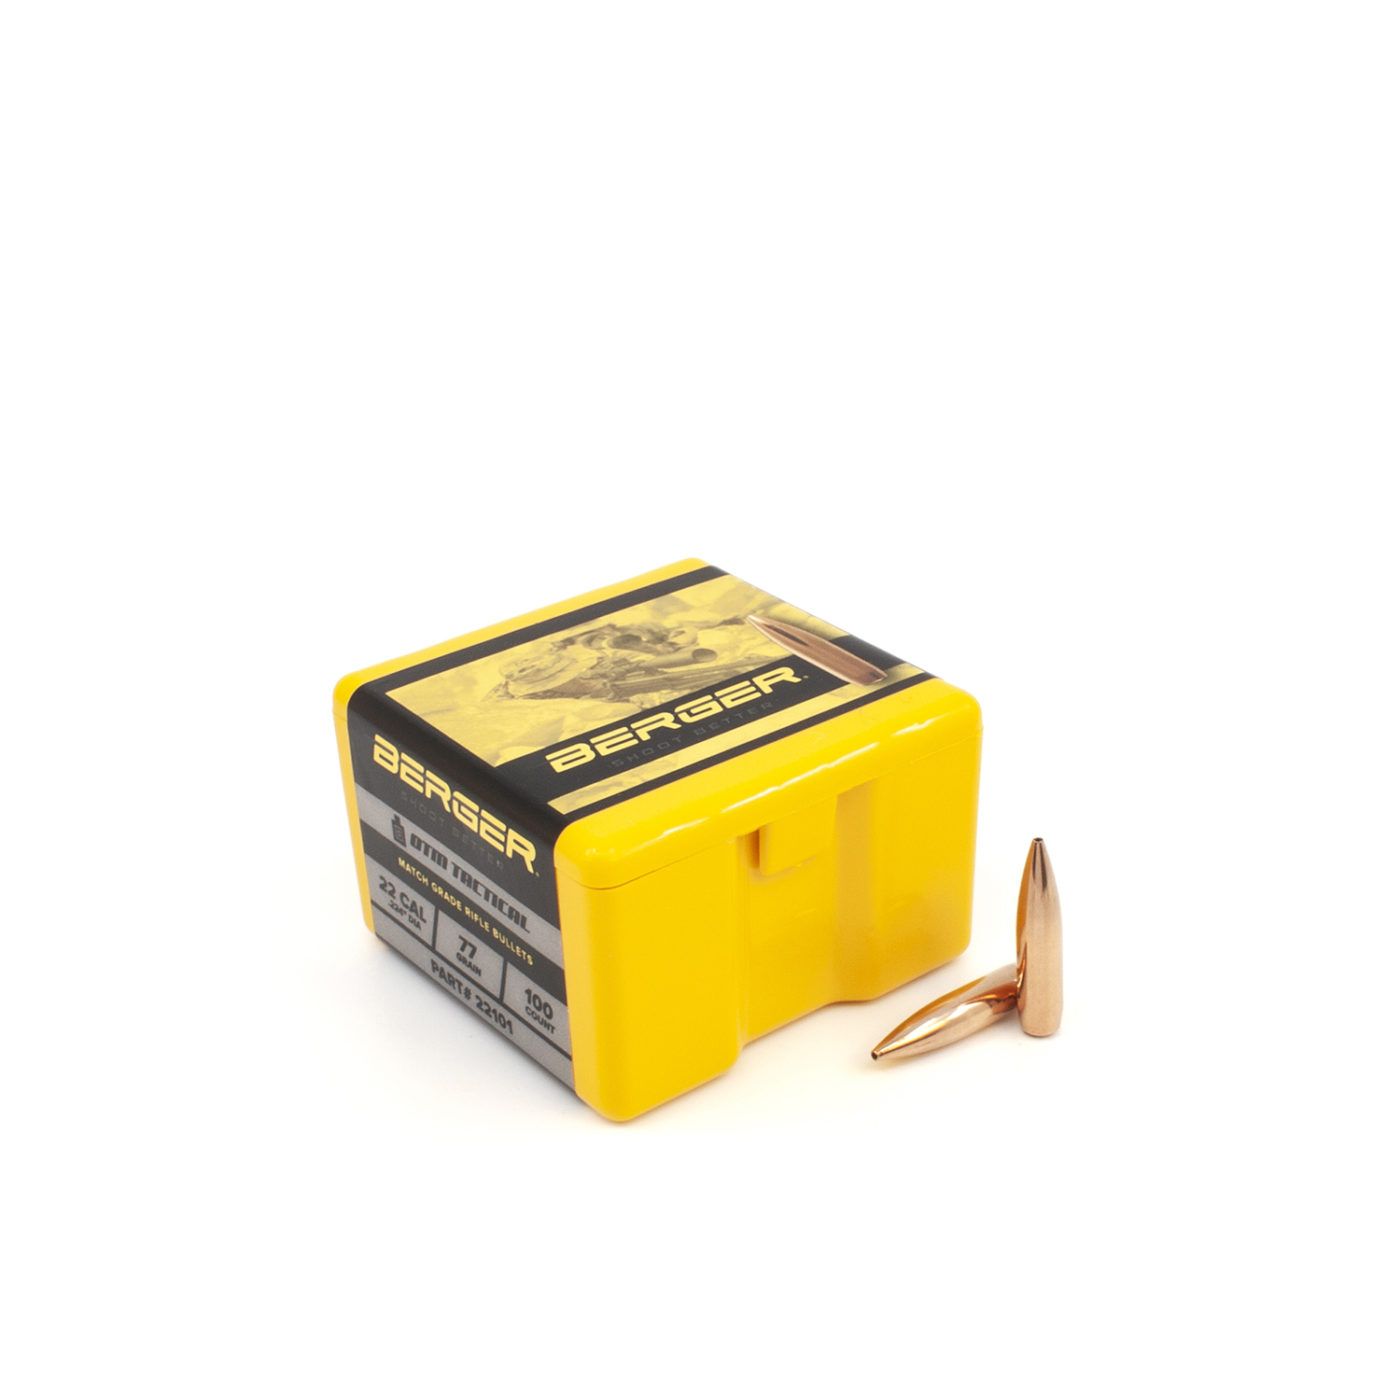 Berger Bullets - .22cal 77gr OTM Tactical - Box of 100